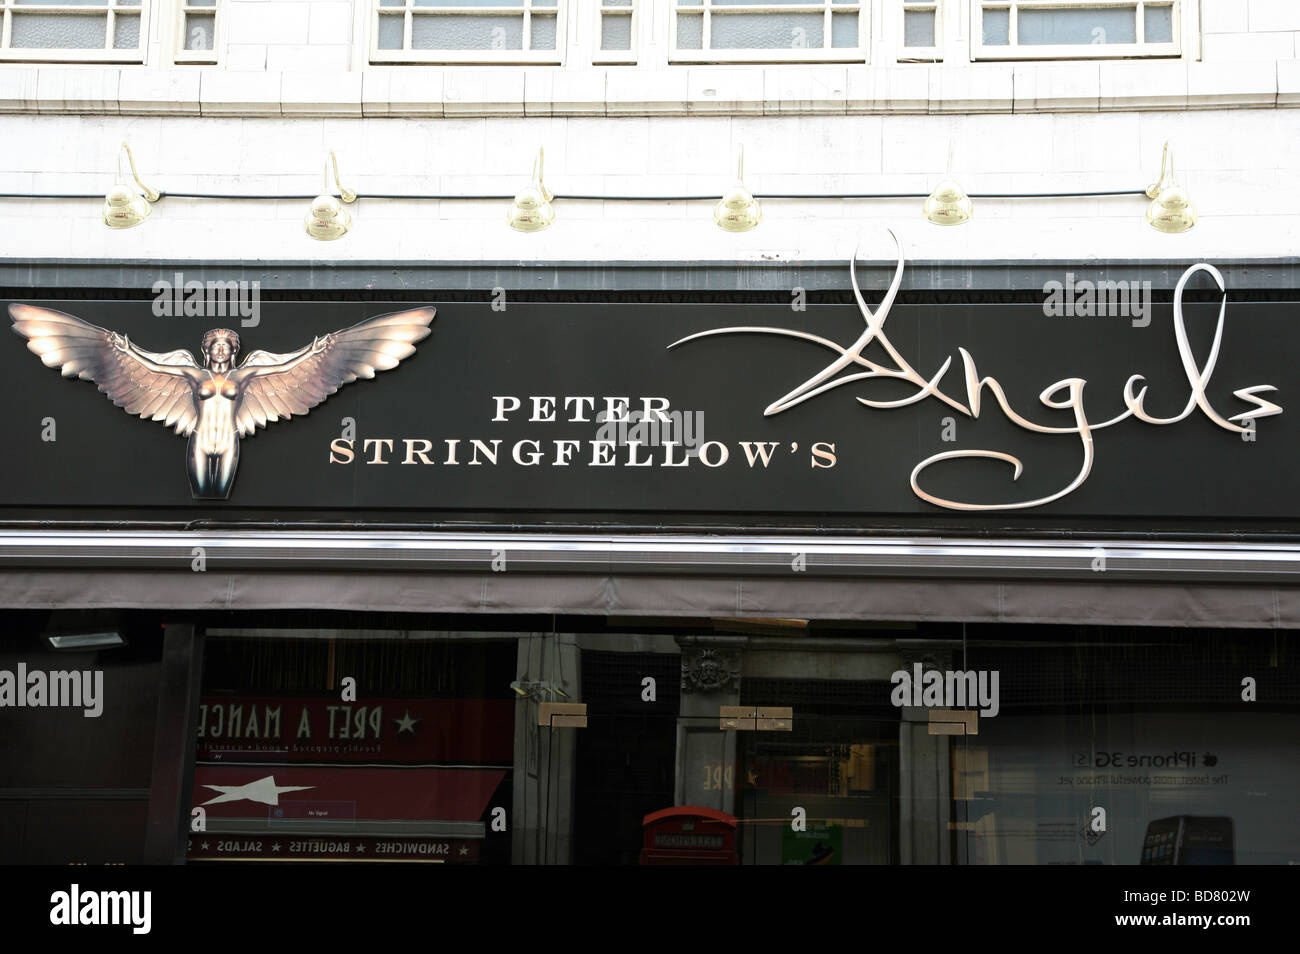 Peter Stringfellow;s Angels nightclub, London Stock Photo